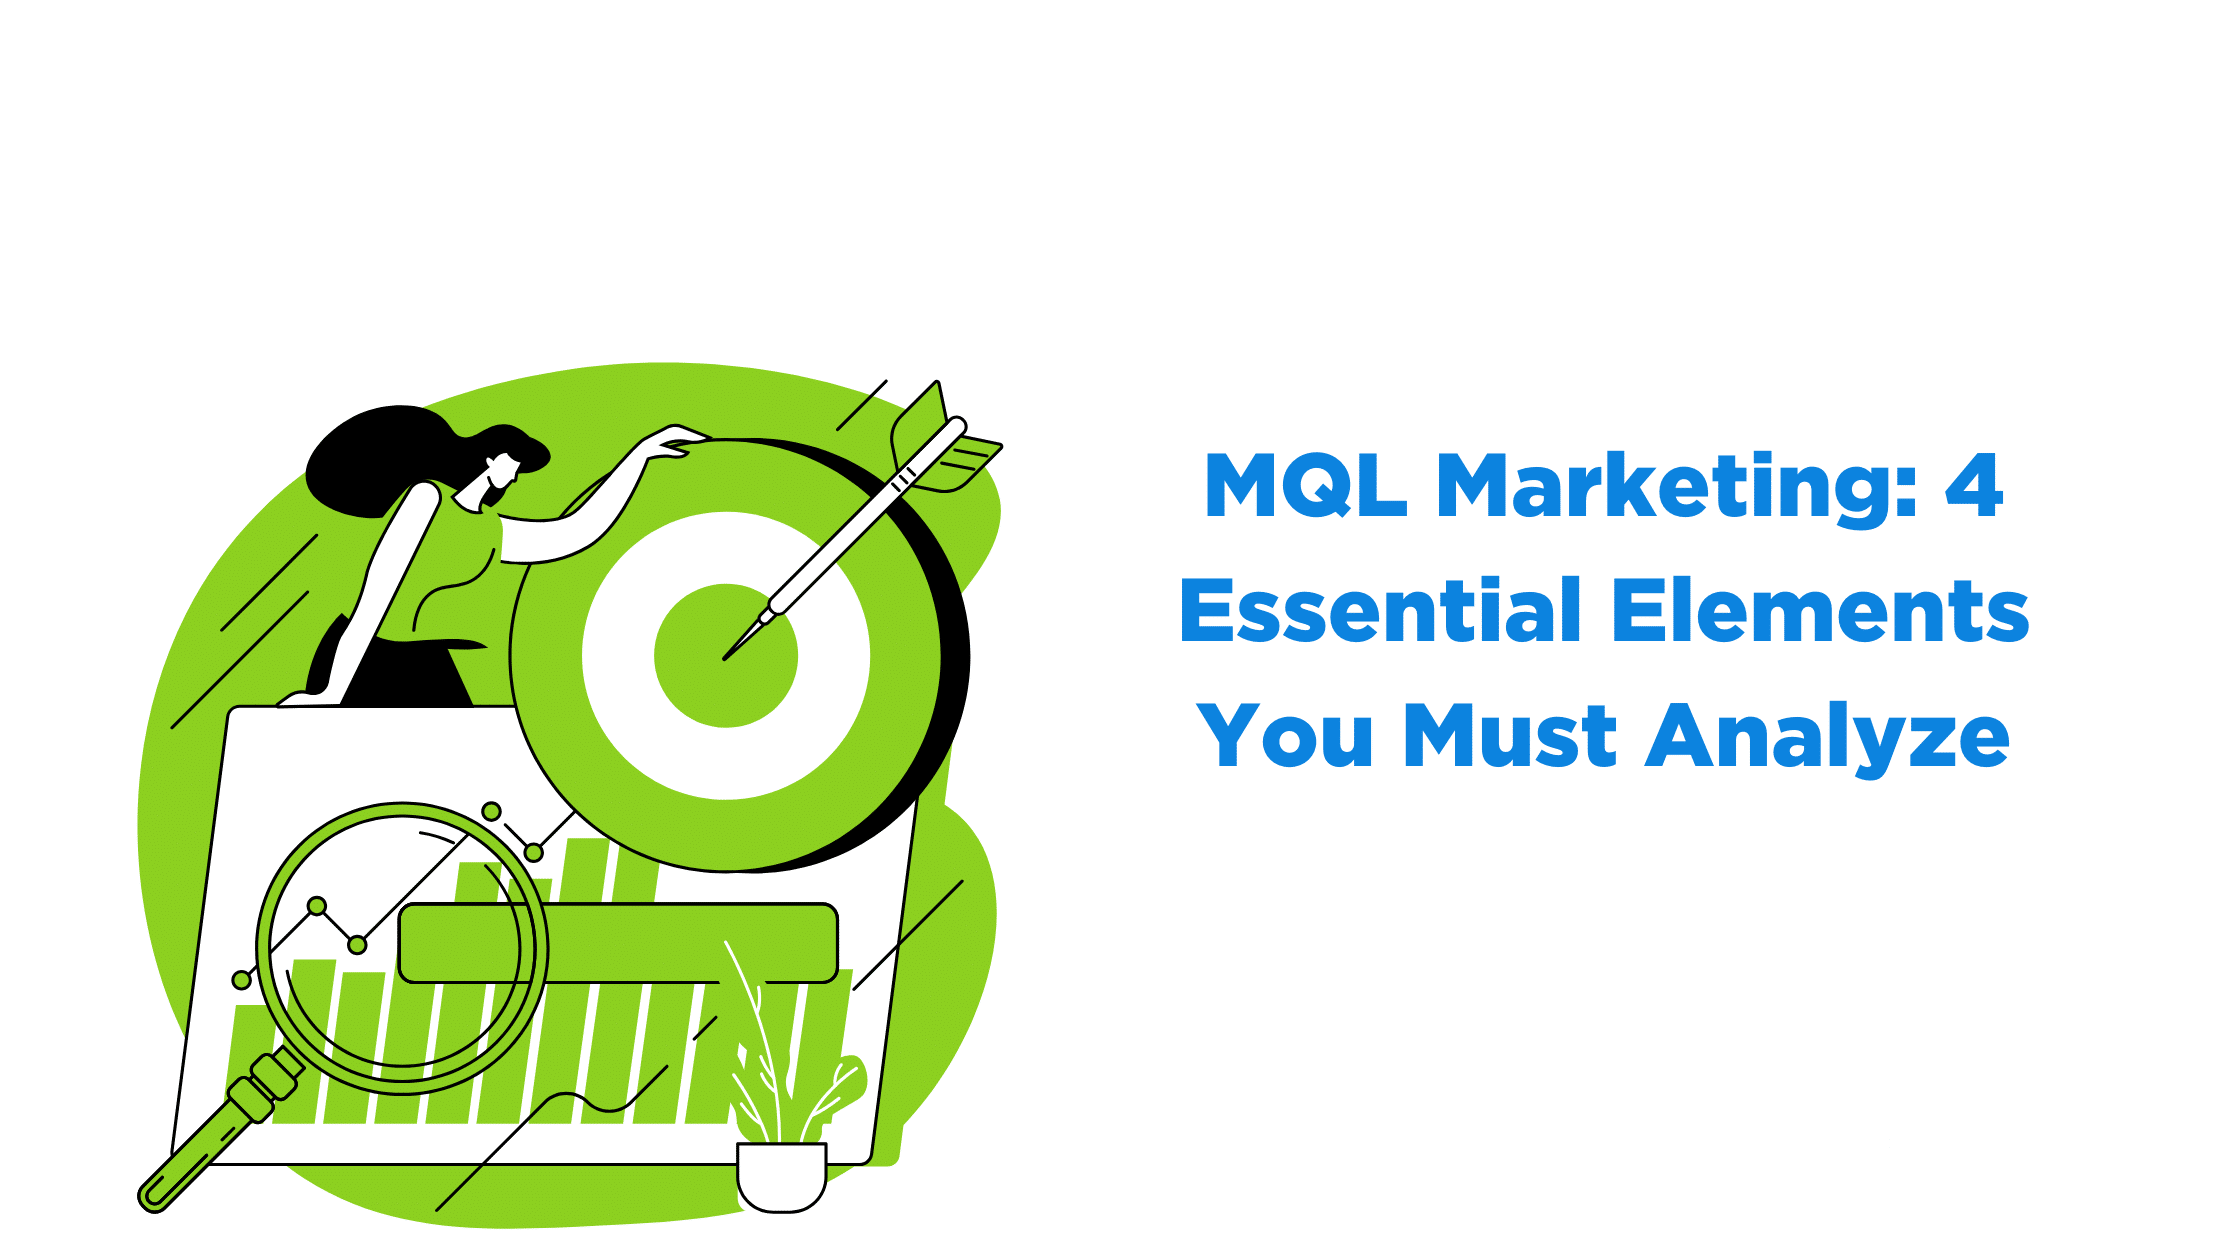 MQL Marketing: 4 Essential Elements You Must Analyze